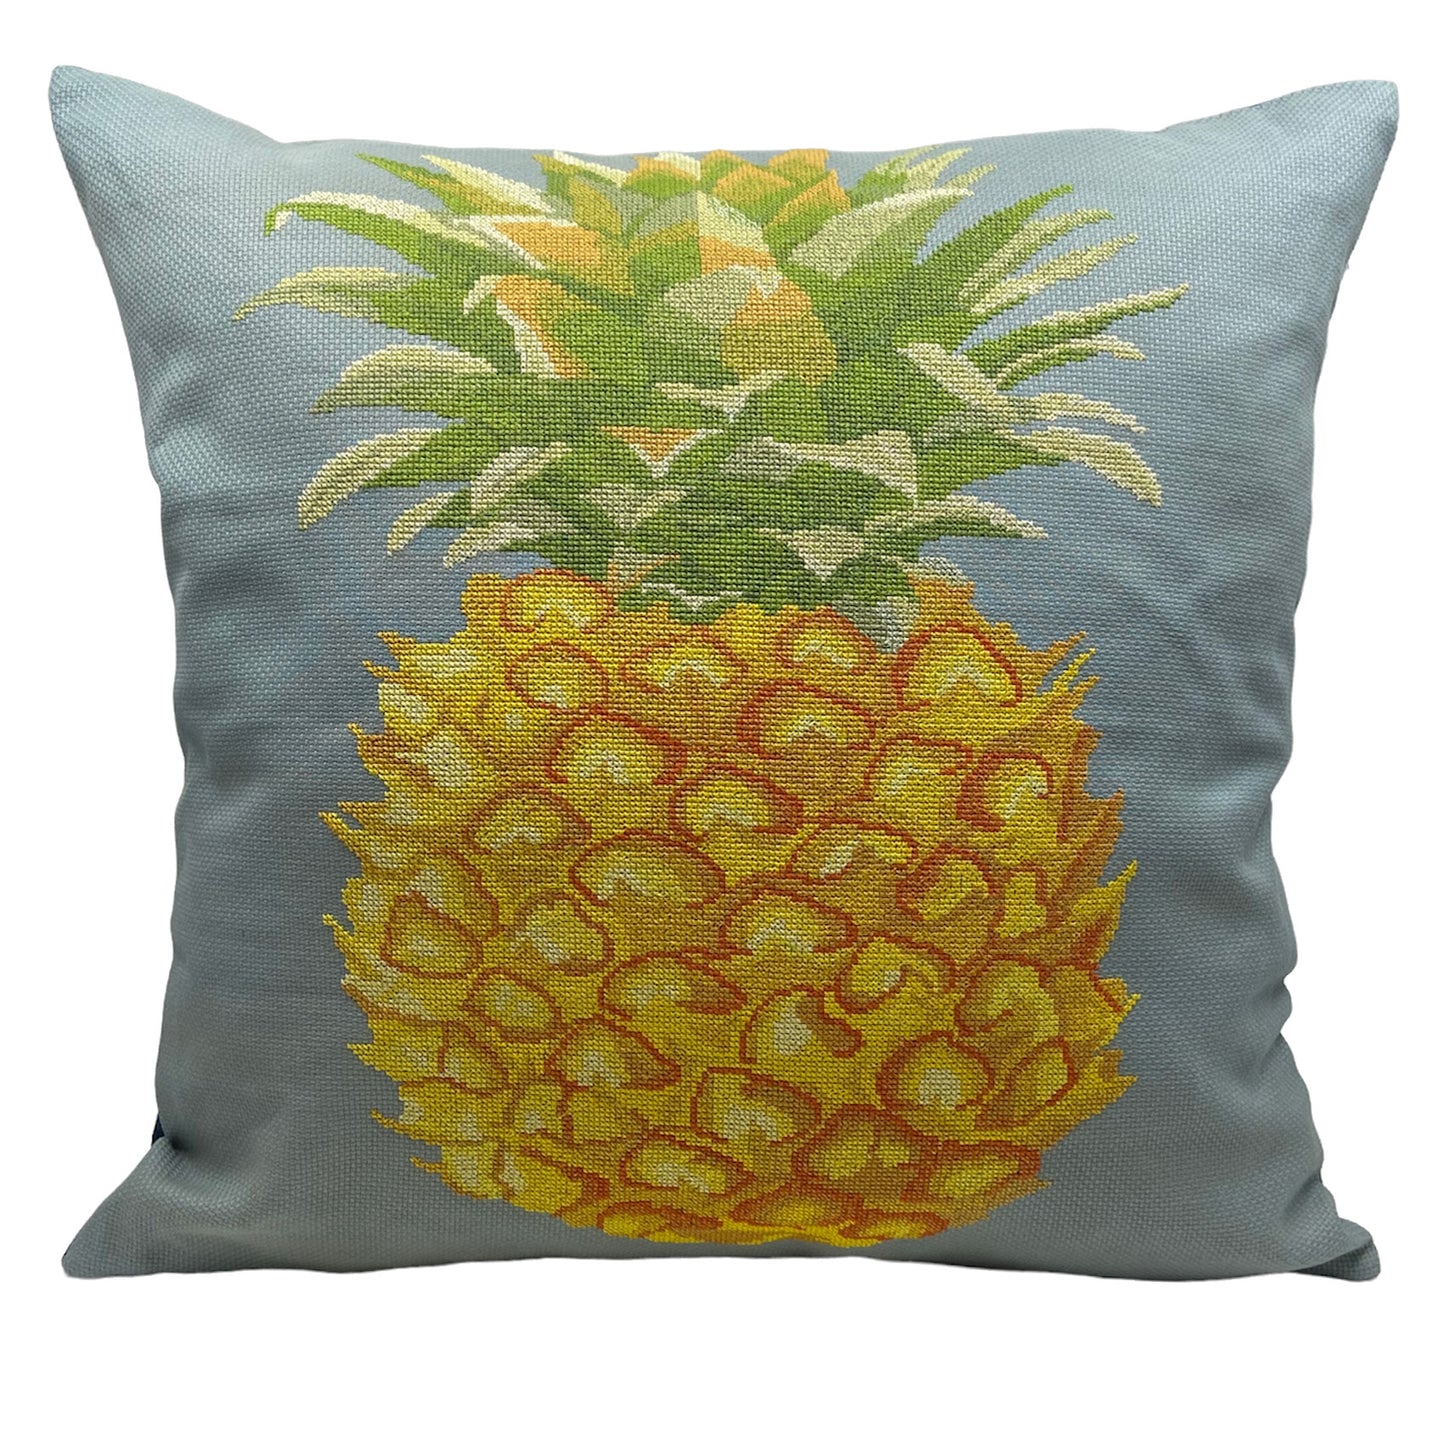 Limited Edition Pineapple Needlepoint cushion